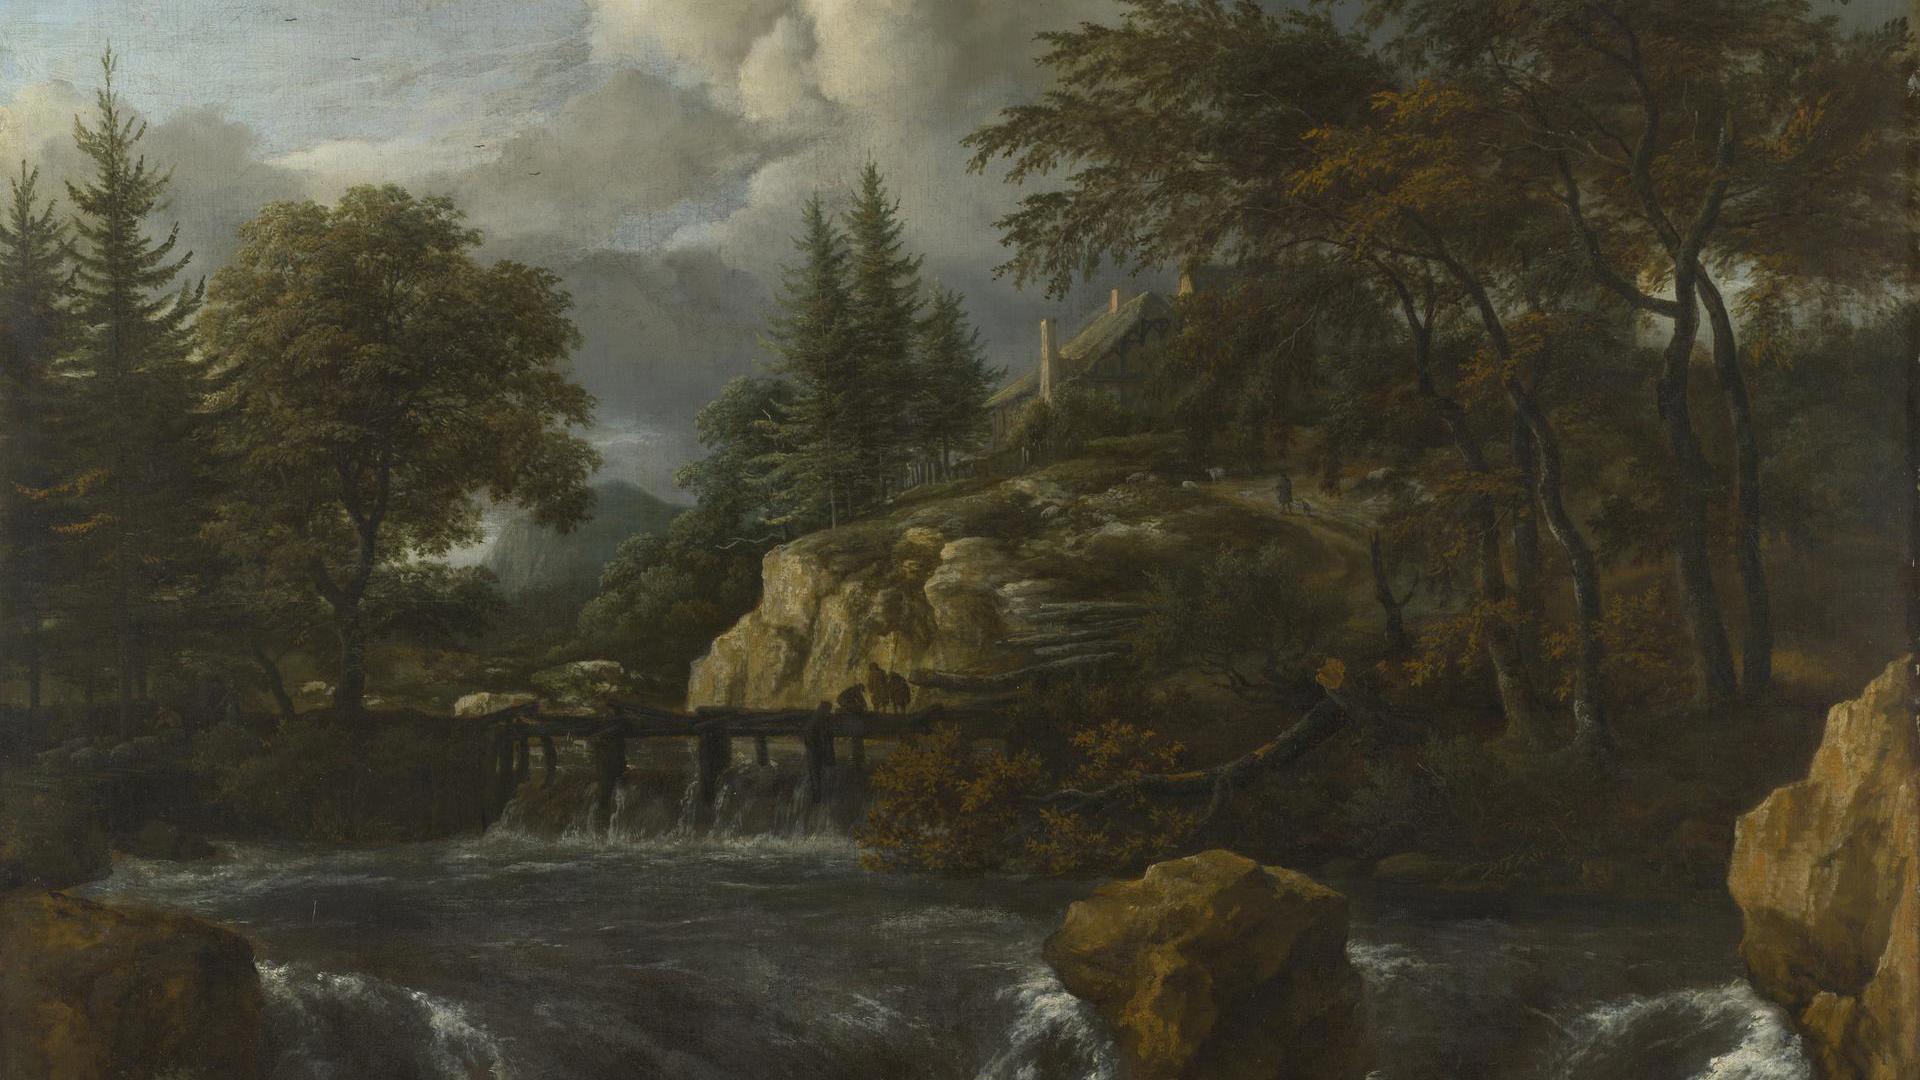 A Waterfall in a Rocky Landscape by Jacob van Ruisdael